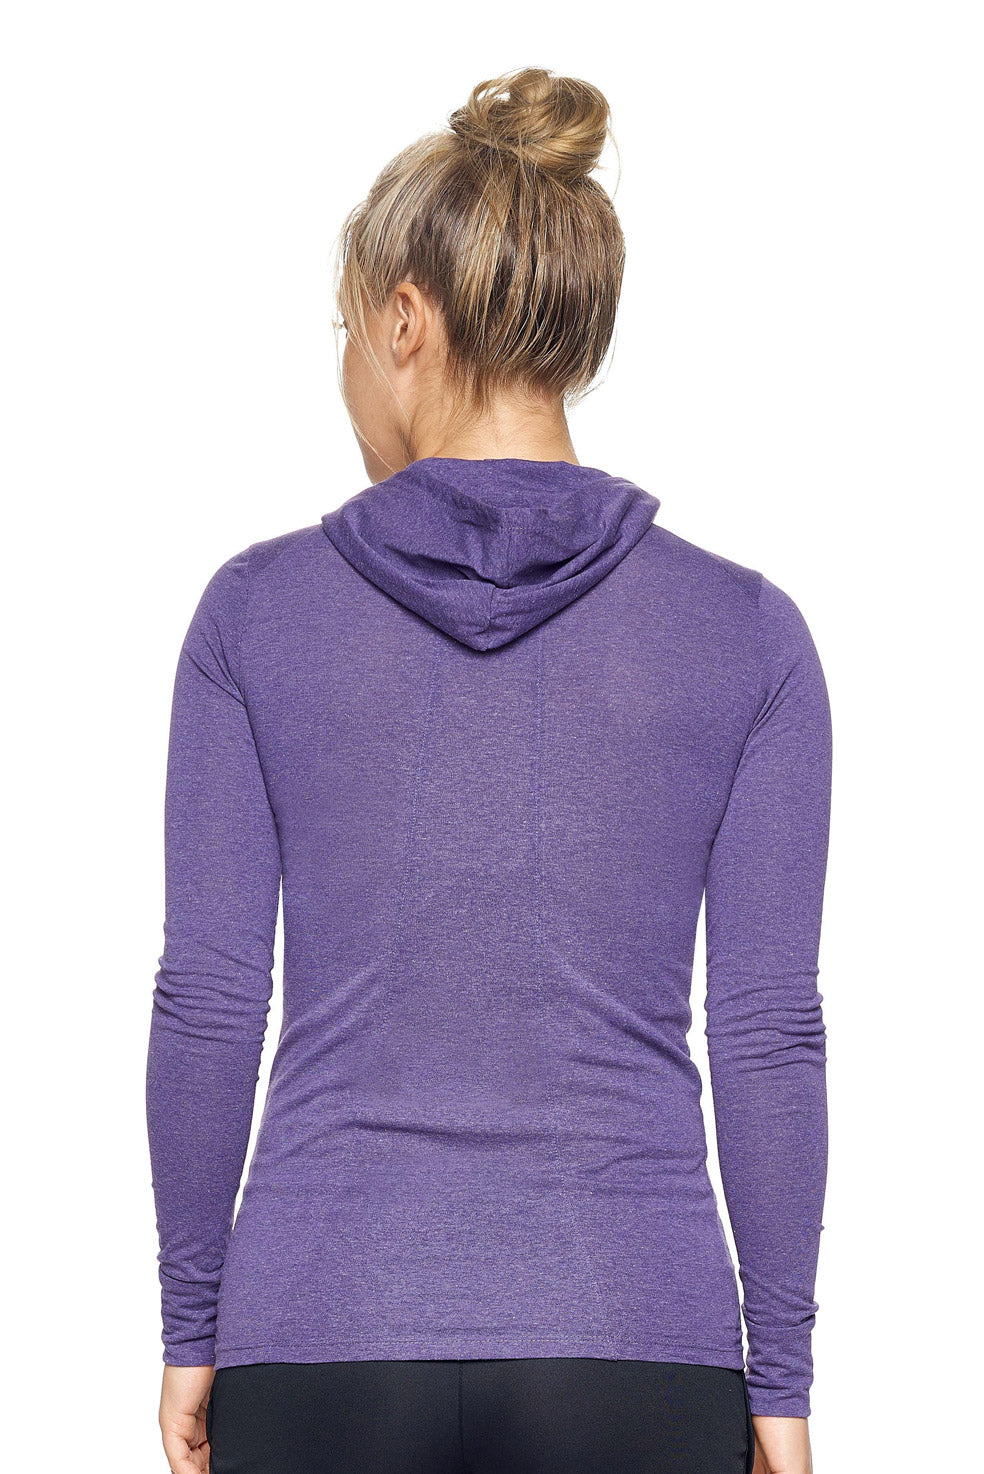 Expert Brand Wholesale Women's Hoodie Shirt Performance in Dark Heather Purple#dark-heather-purple